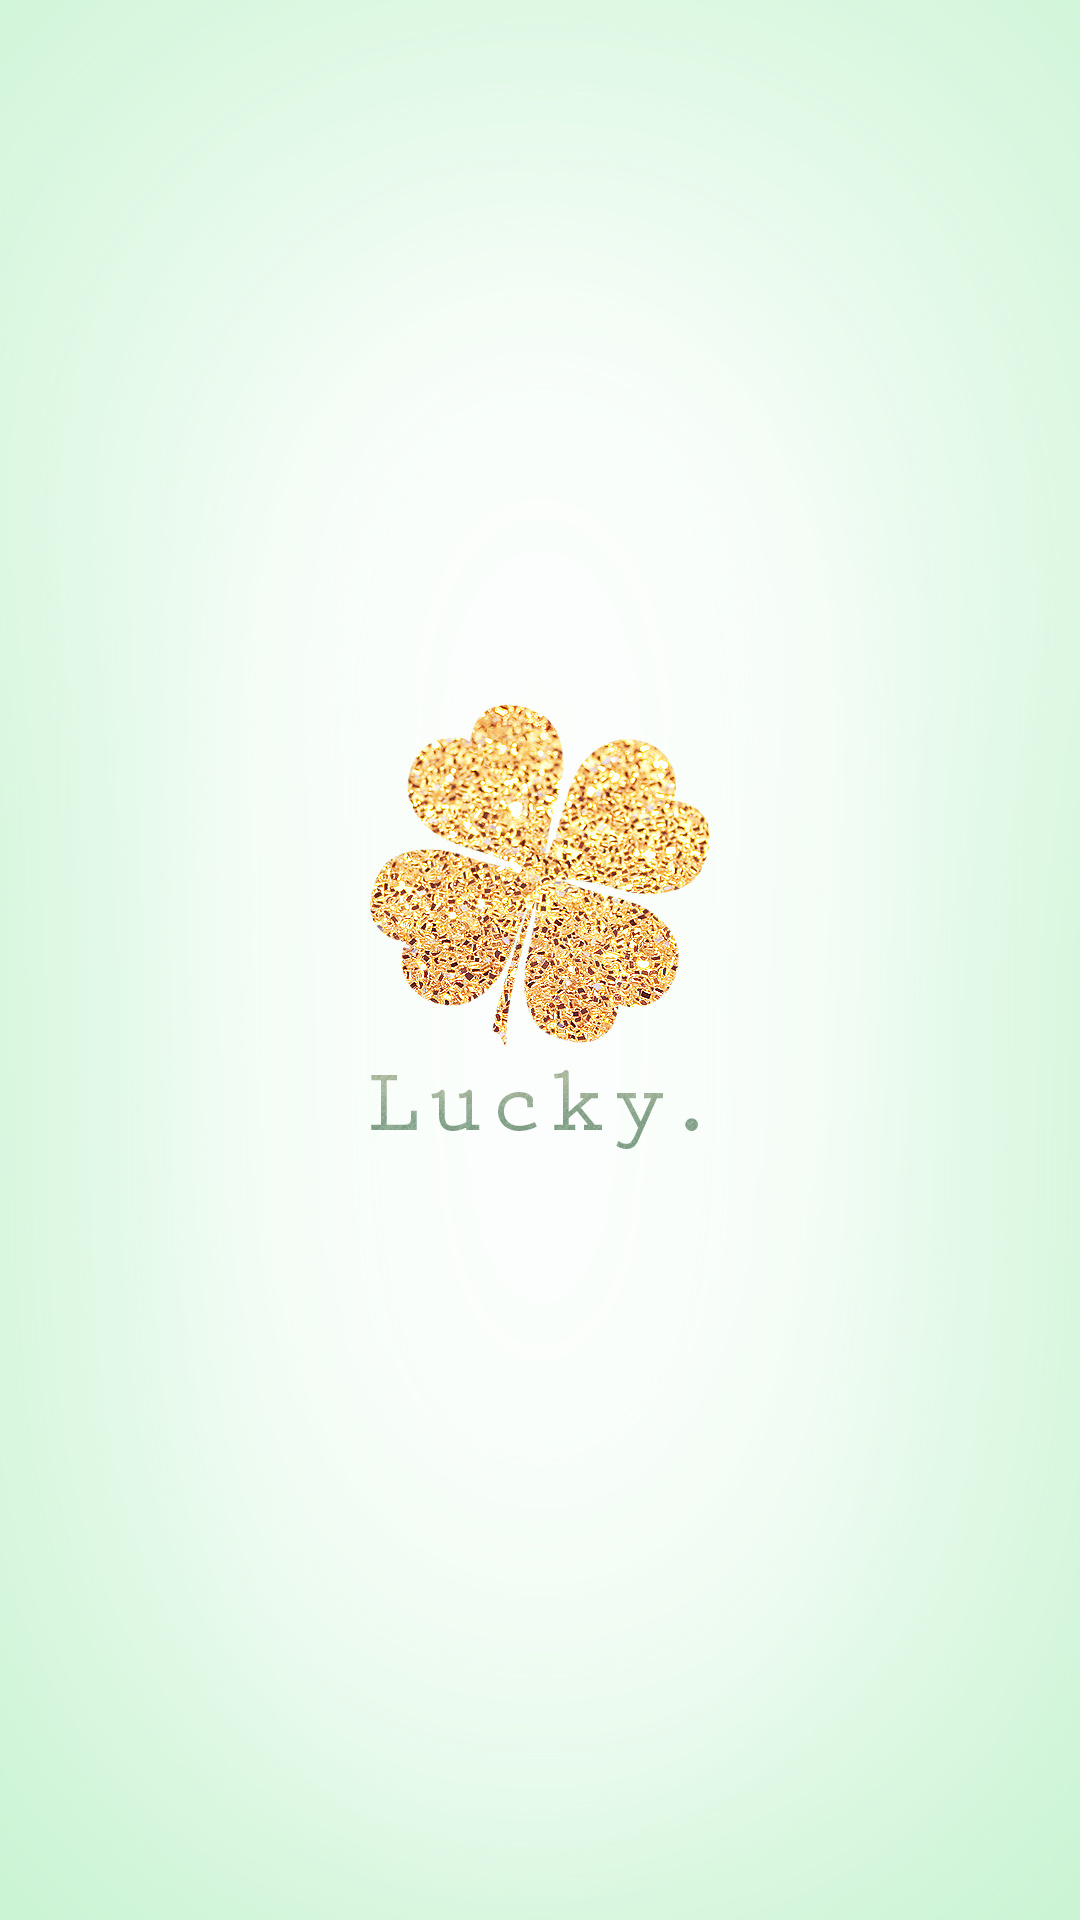 Good Luck: A golden four-leaf clover, A universally recognized symbol, Irish legend. 1080x1920 Full HD Wallpaper.